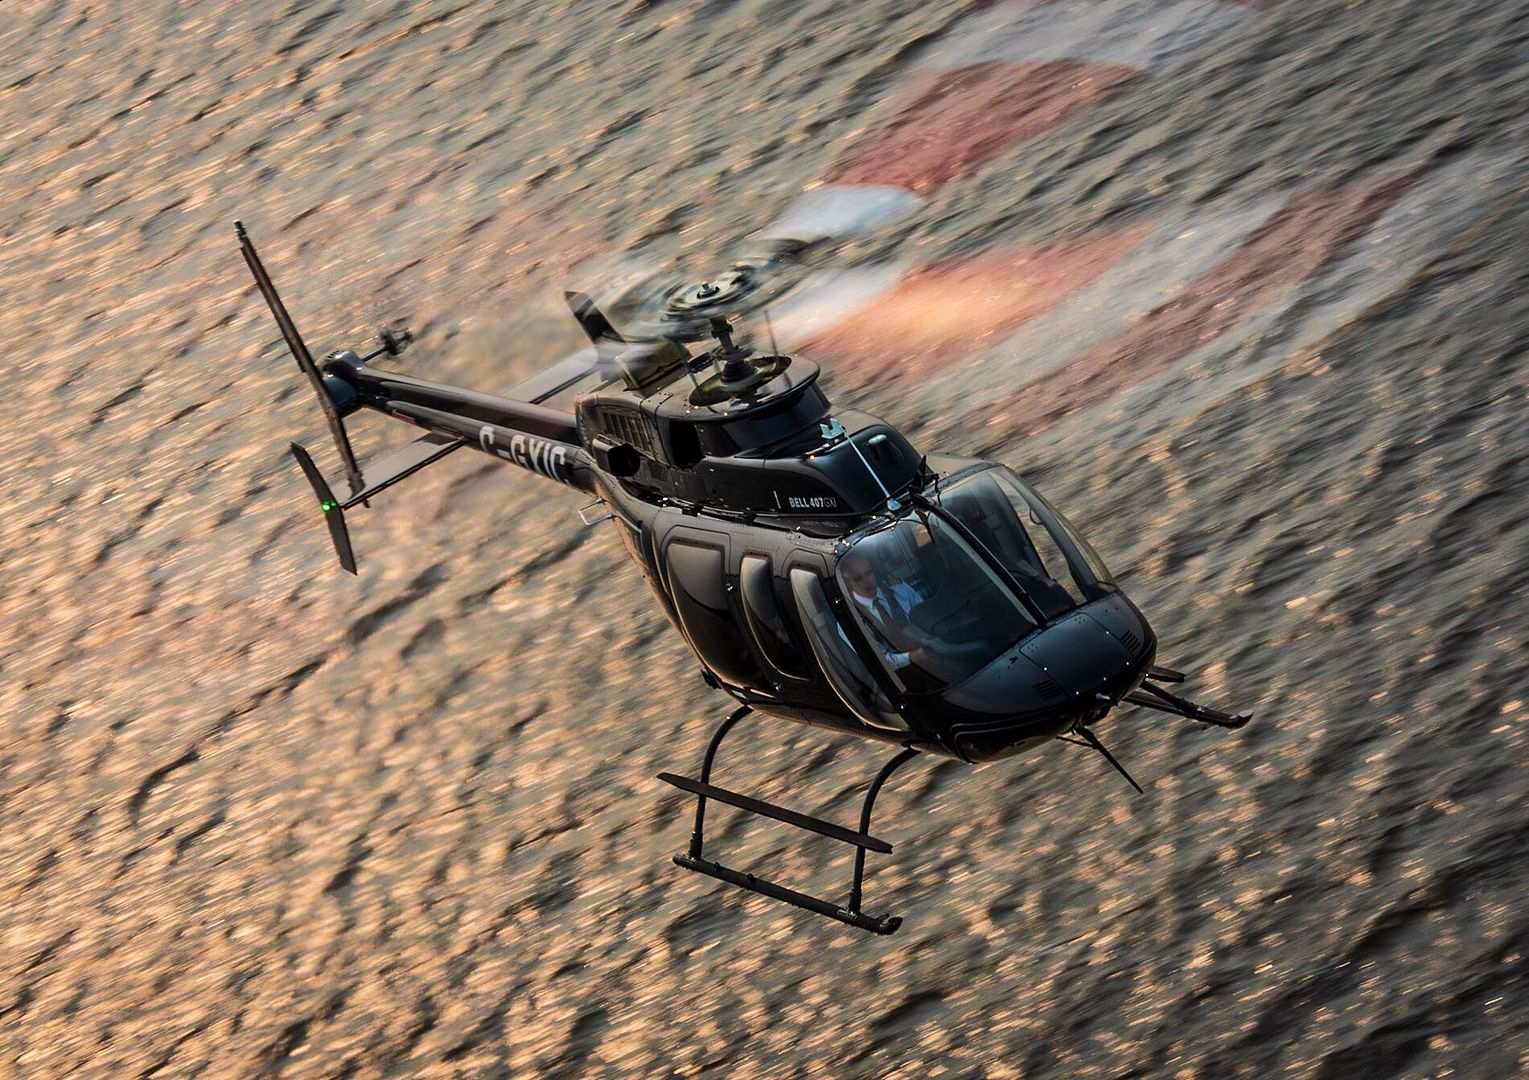 Bell 407GXI Demo Aircraft